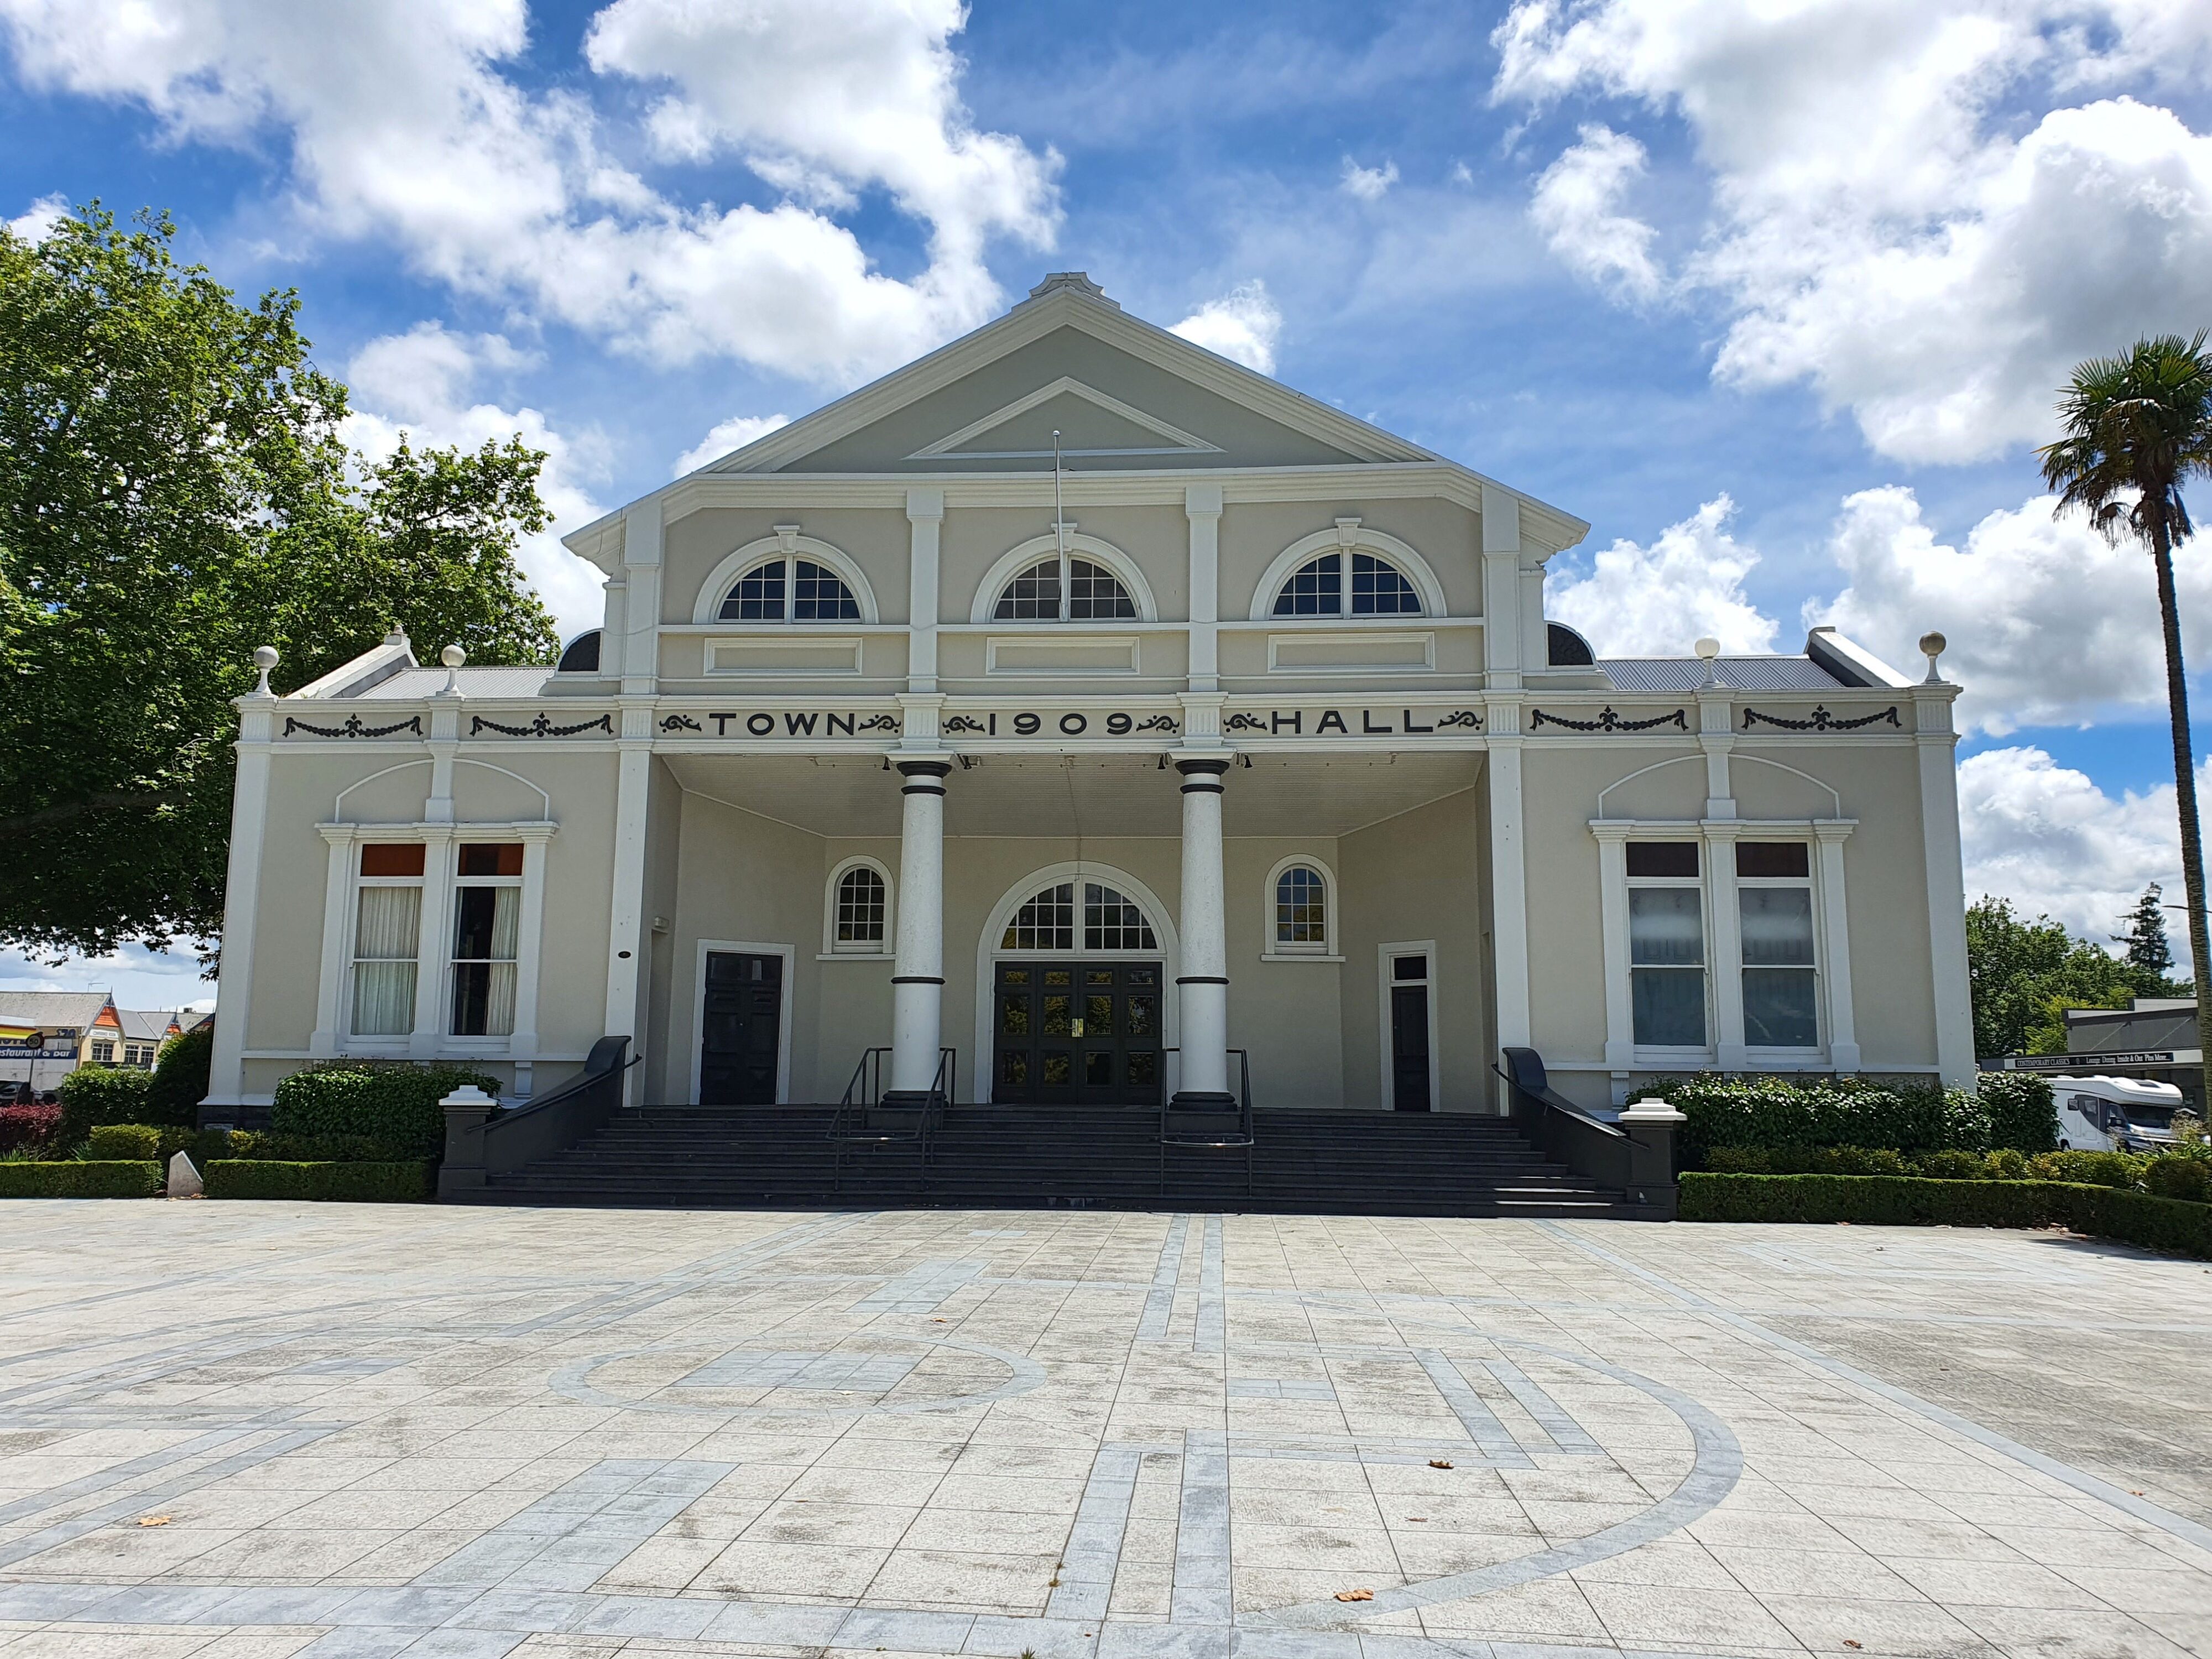 Photo of the Town Hall in Cambridge, Waikato, New Zealand.